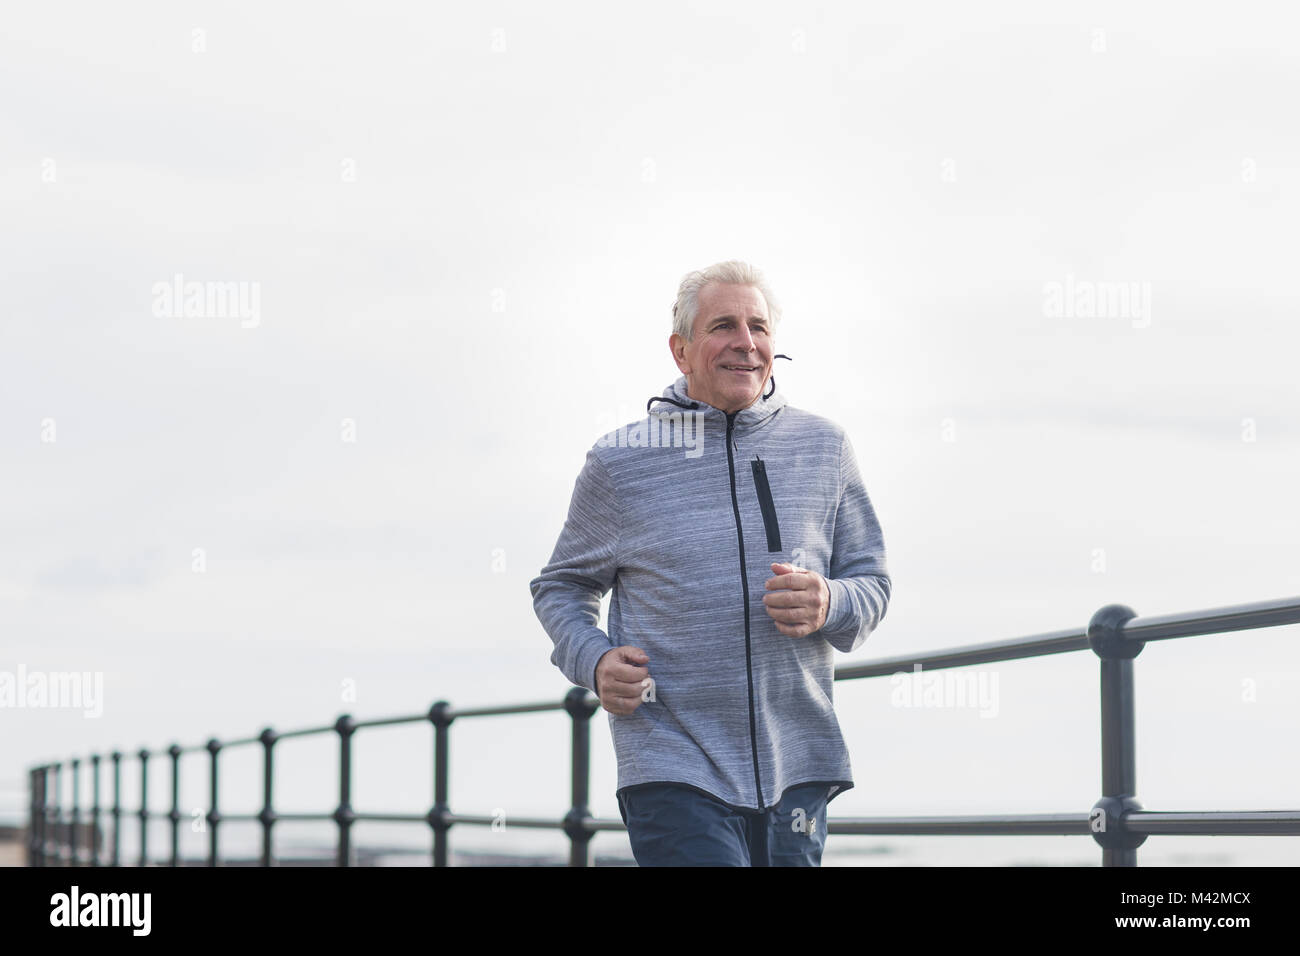 Senior man jogging outdoors Stock Photo